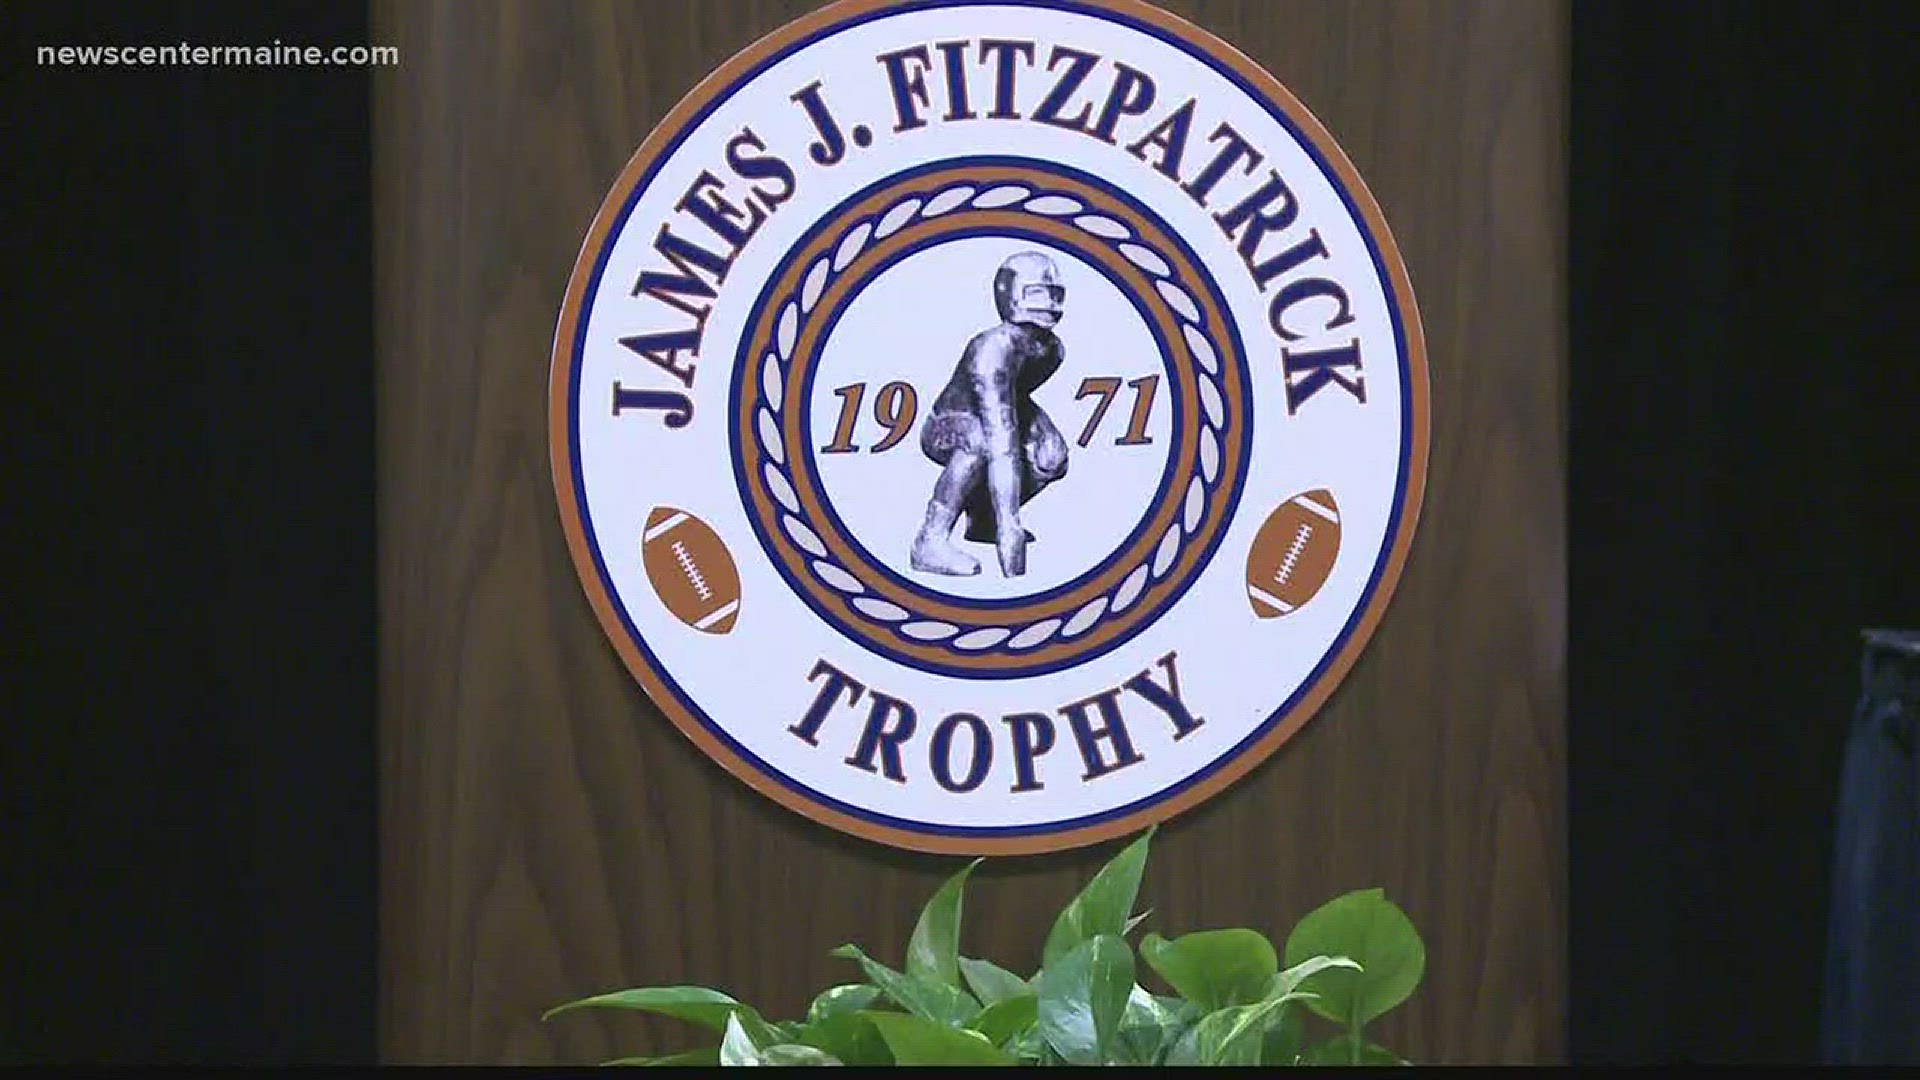 James J Fitzpatrick Awards